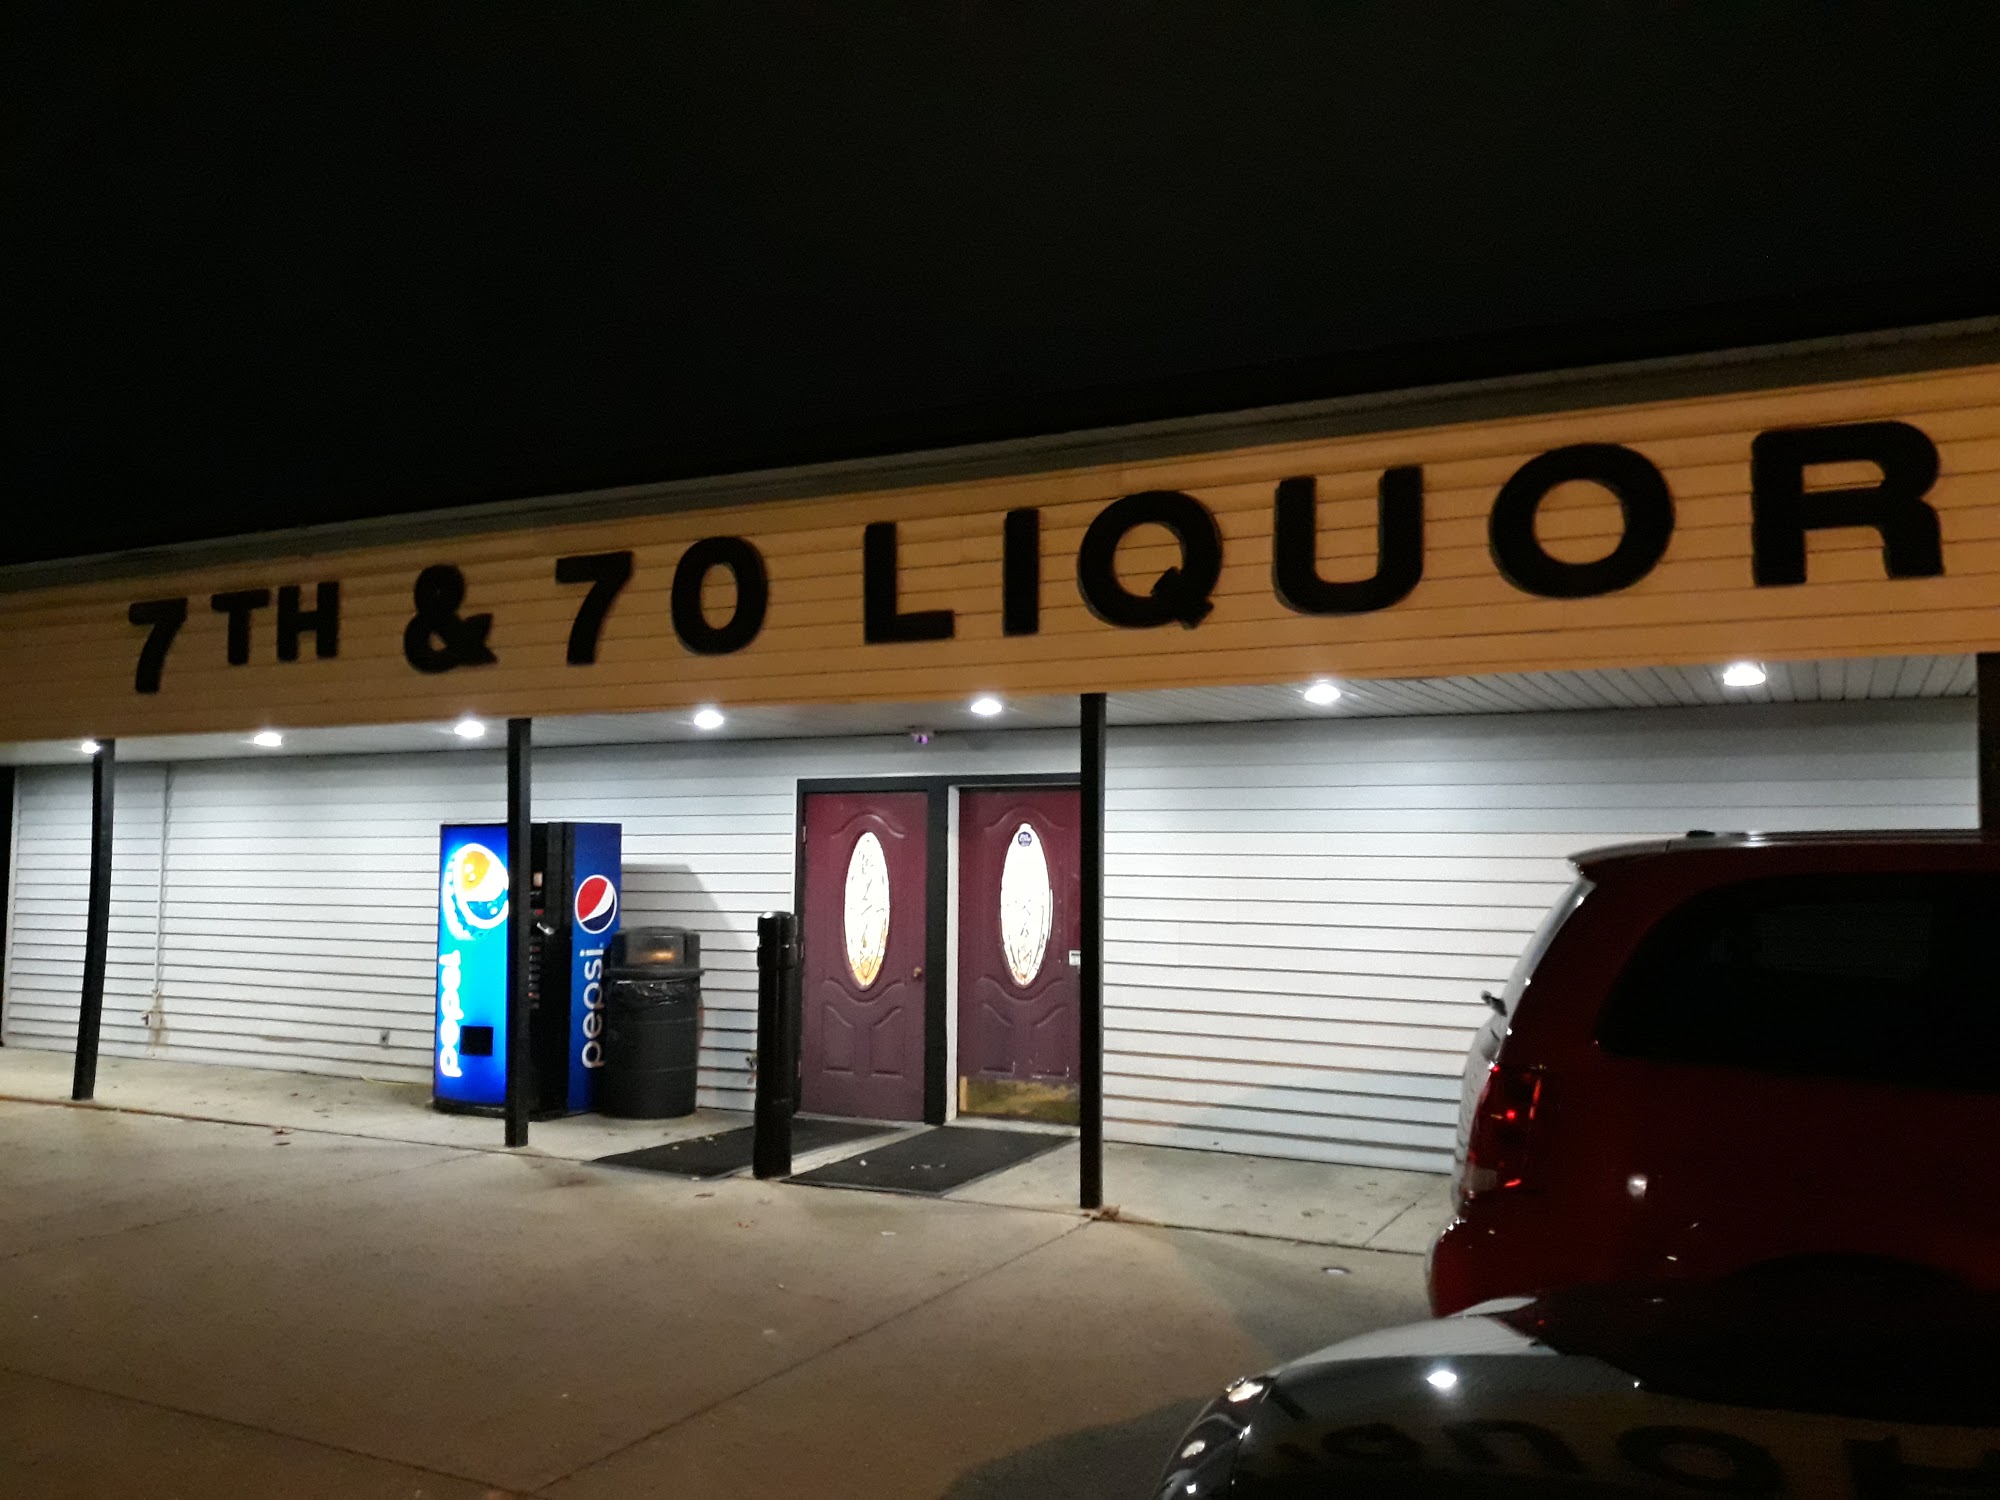 Bower's 7th & 70 Liquor